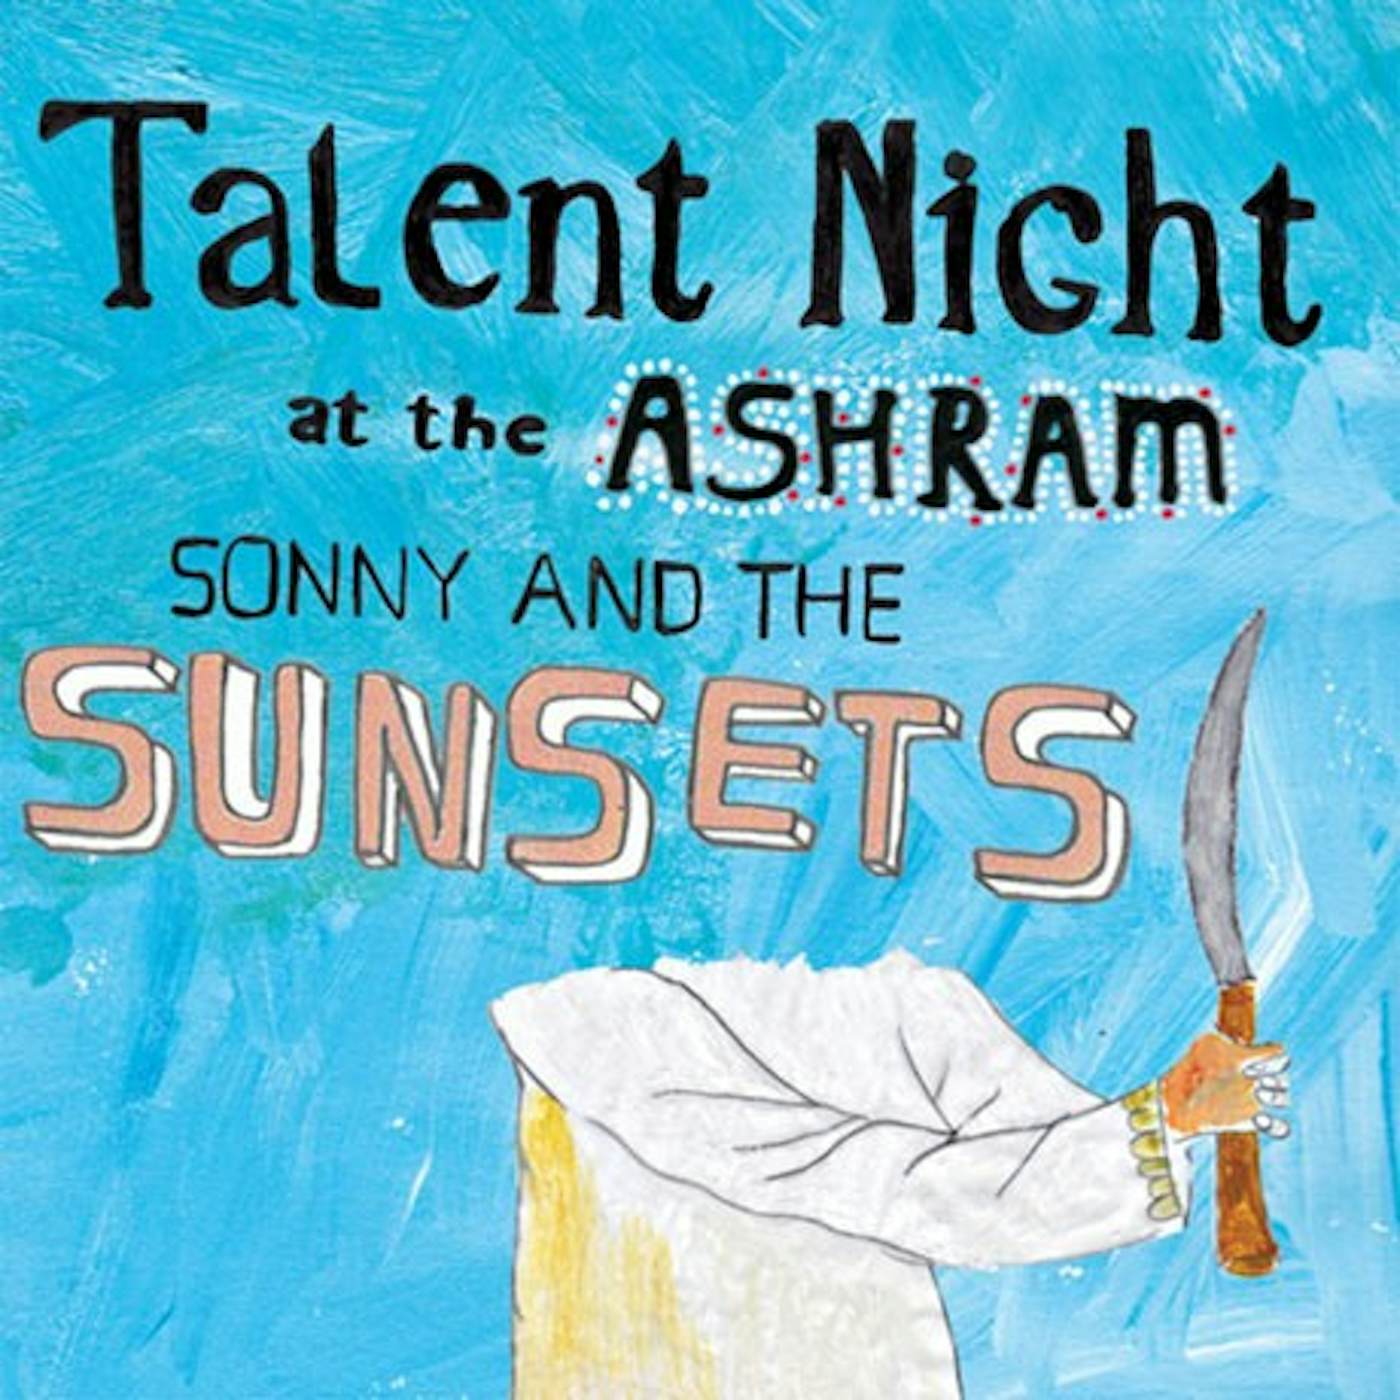 Sonny & The Sunsets Talent Night at the Ashram (Garage Sale)